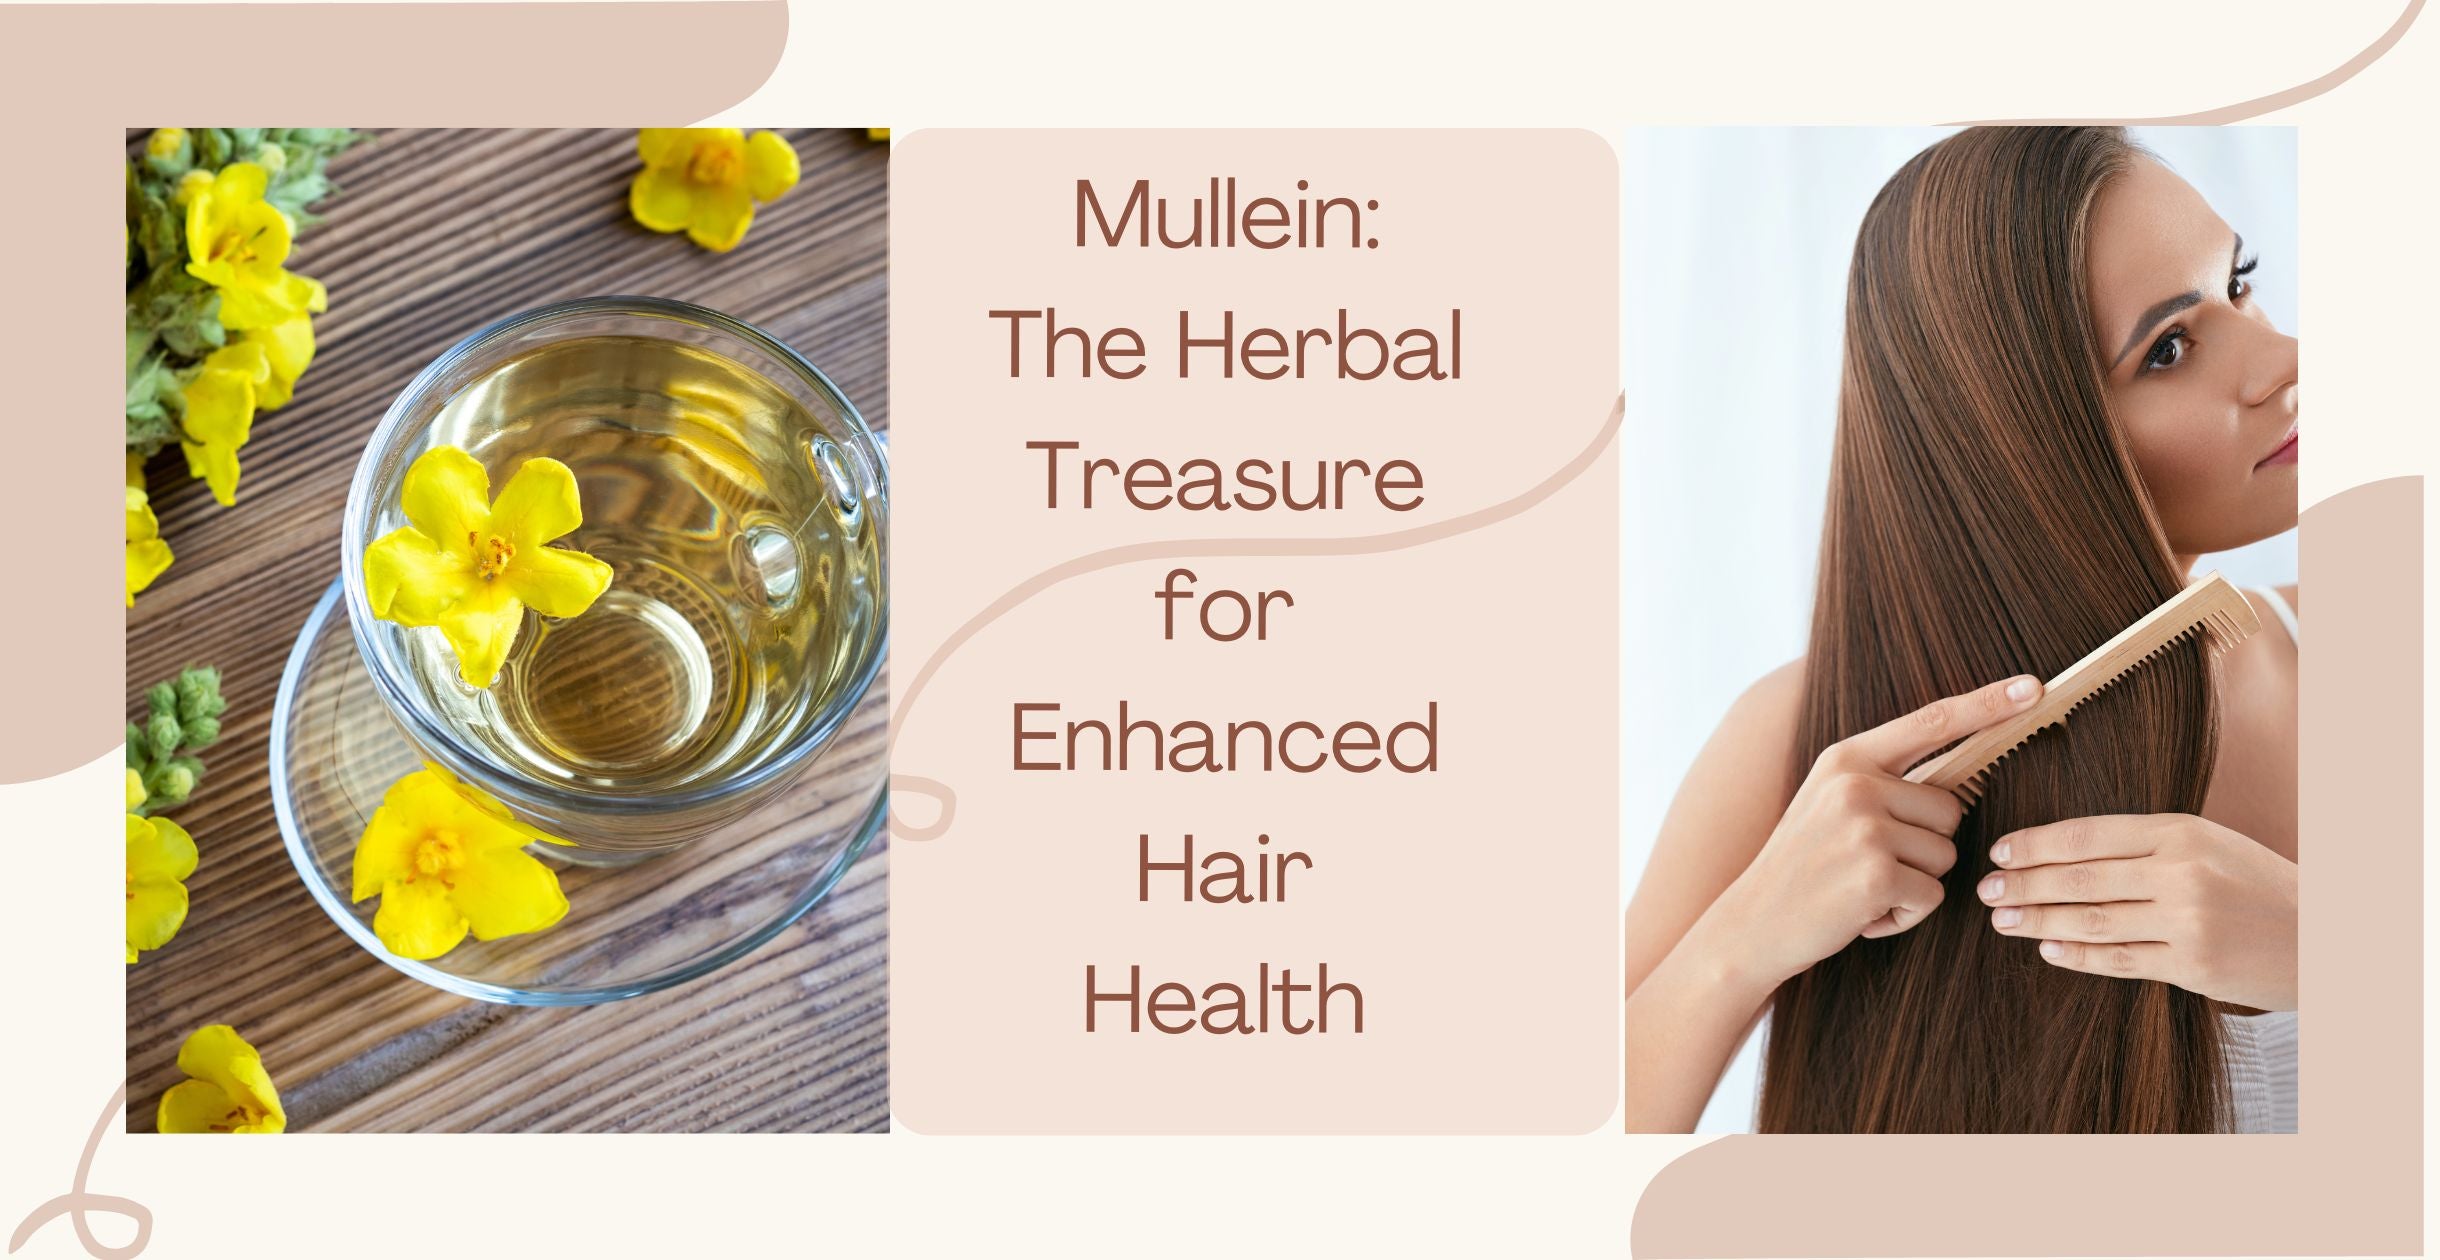 Mullein: The Herbal Treasure for Enhanced Hair Health